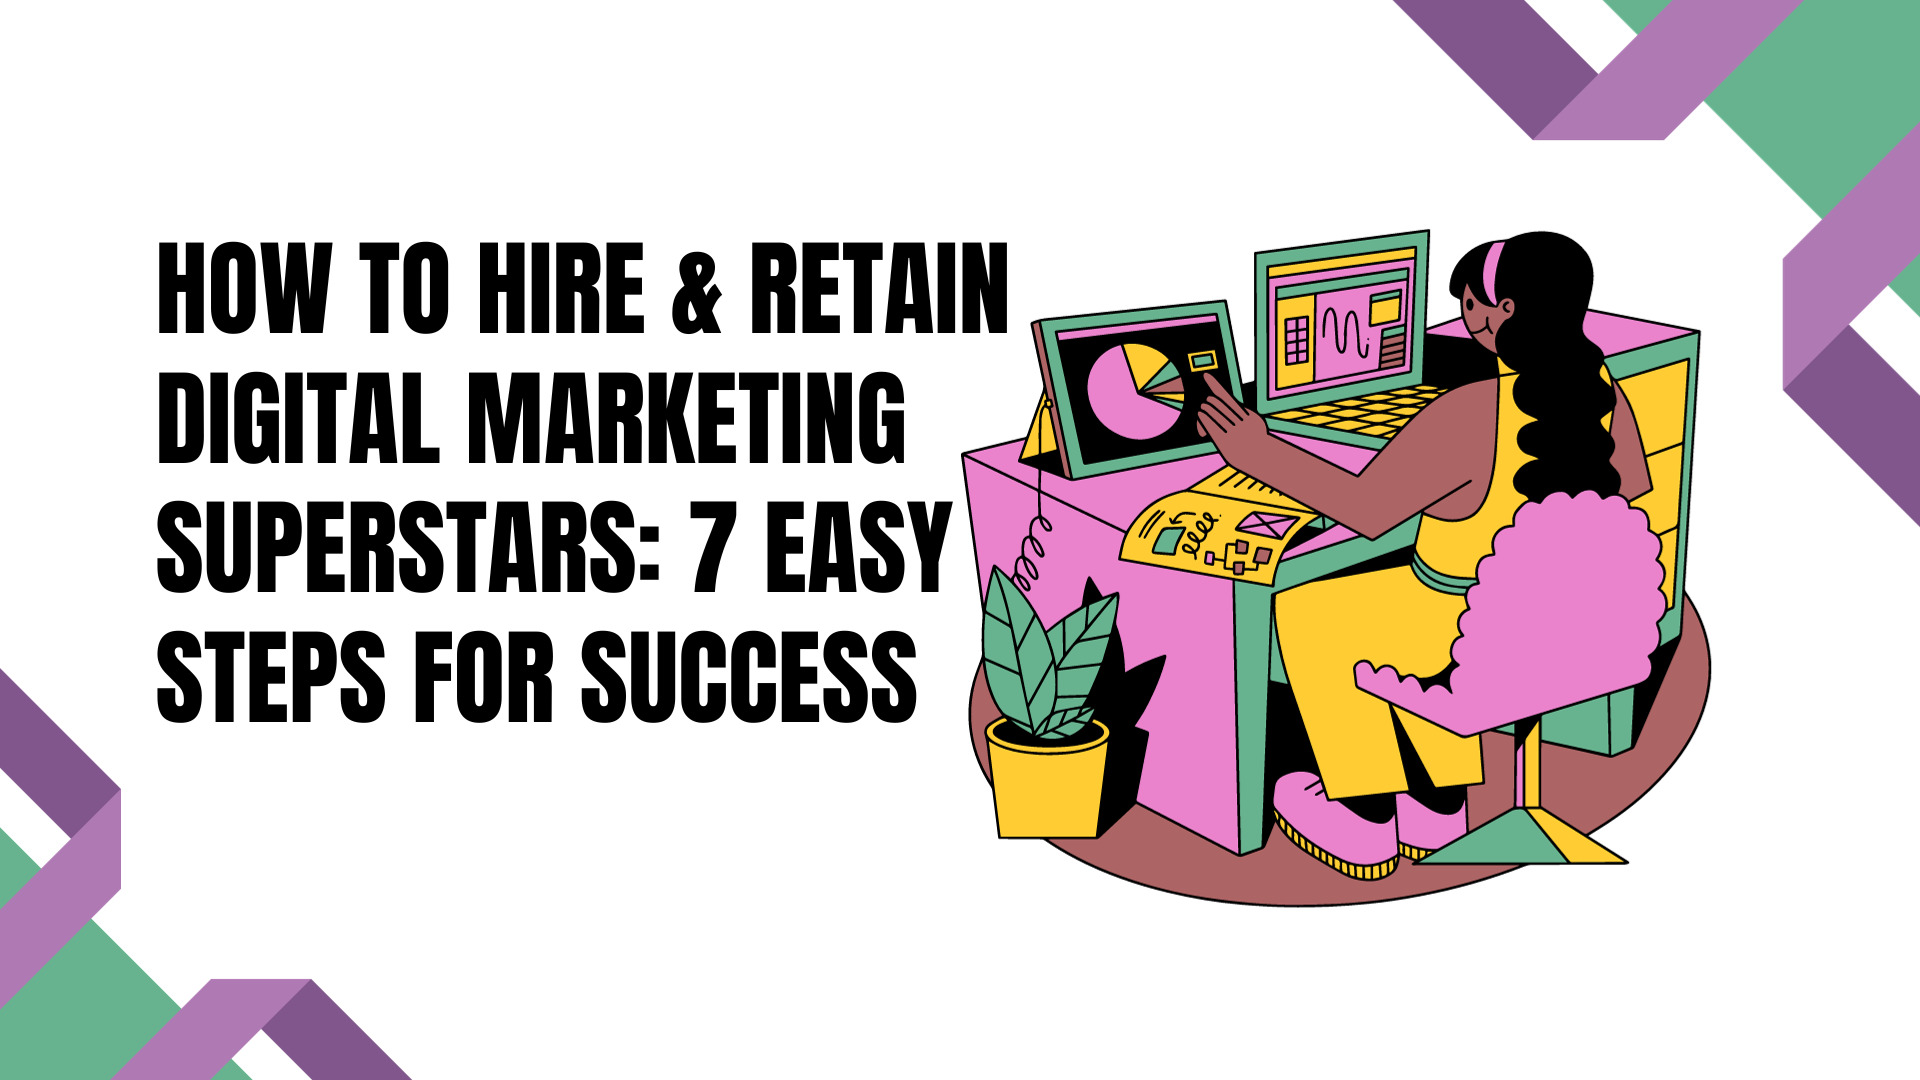 Steps to hire top digital marketing talent